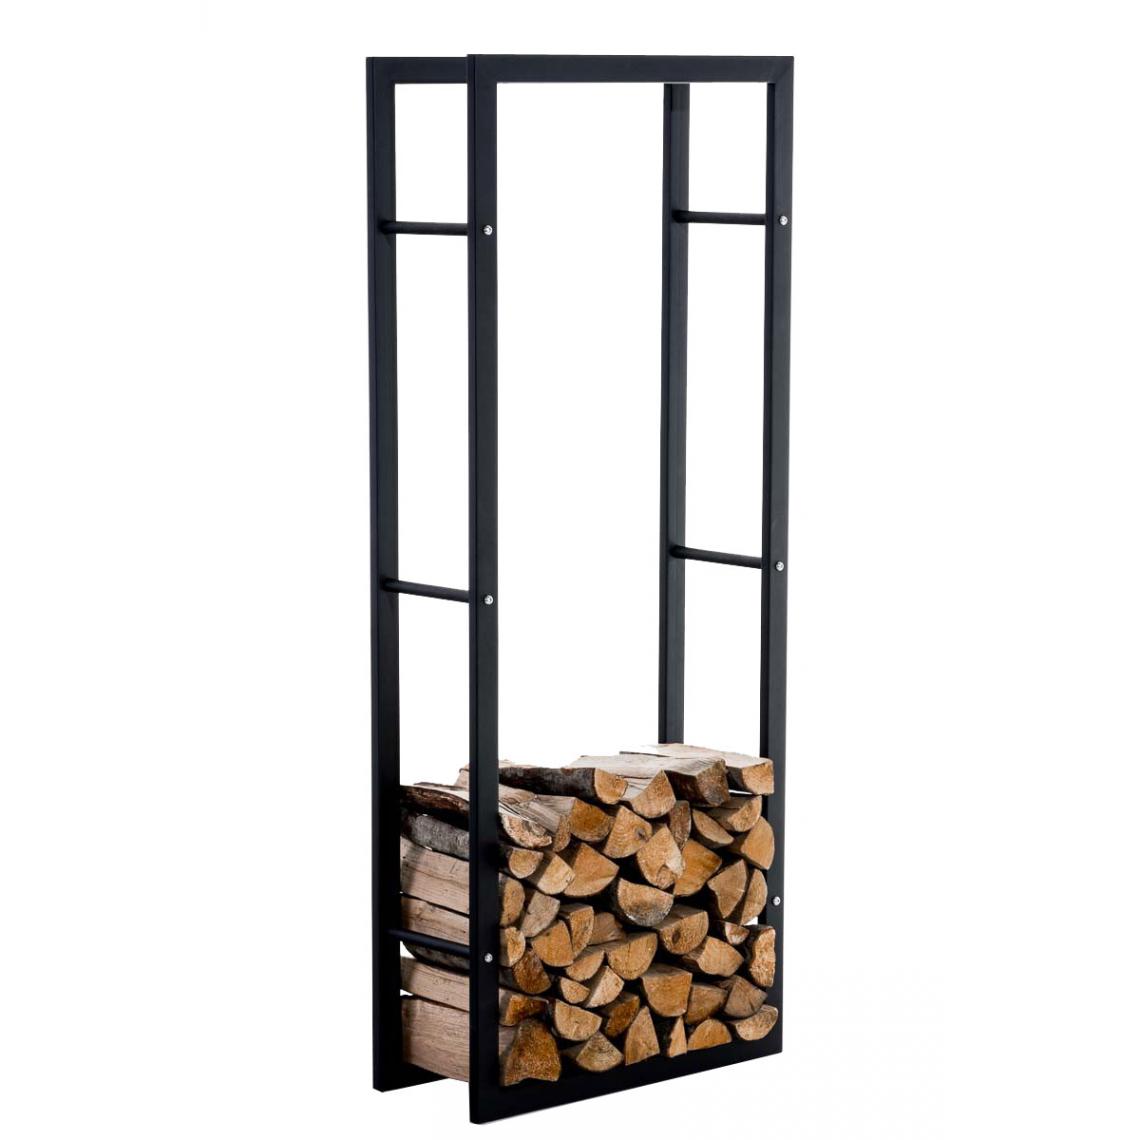 Icaverne - Stylé Support à bois reference Ngerulmud V3 25x60x150 couleur noir - Chaises